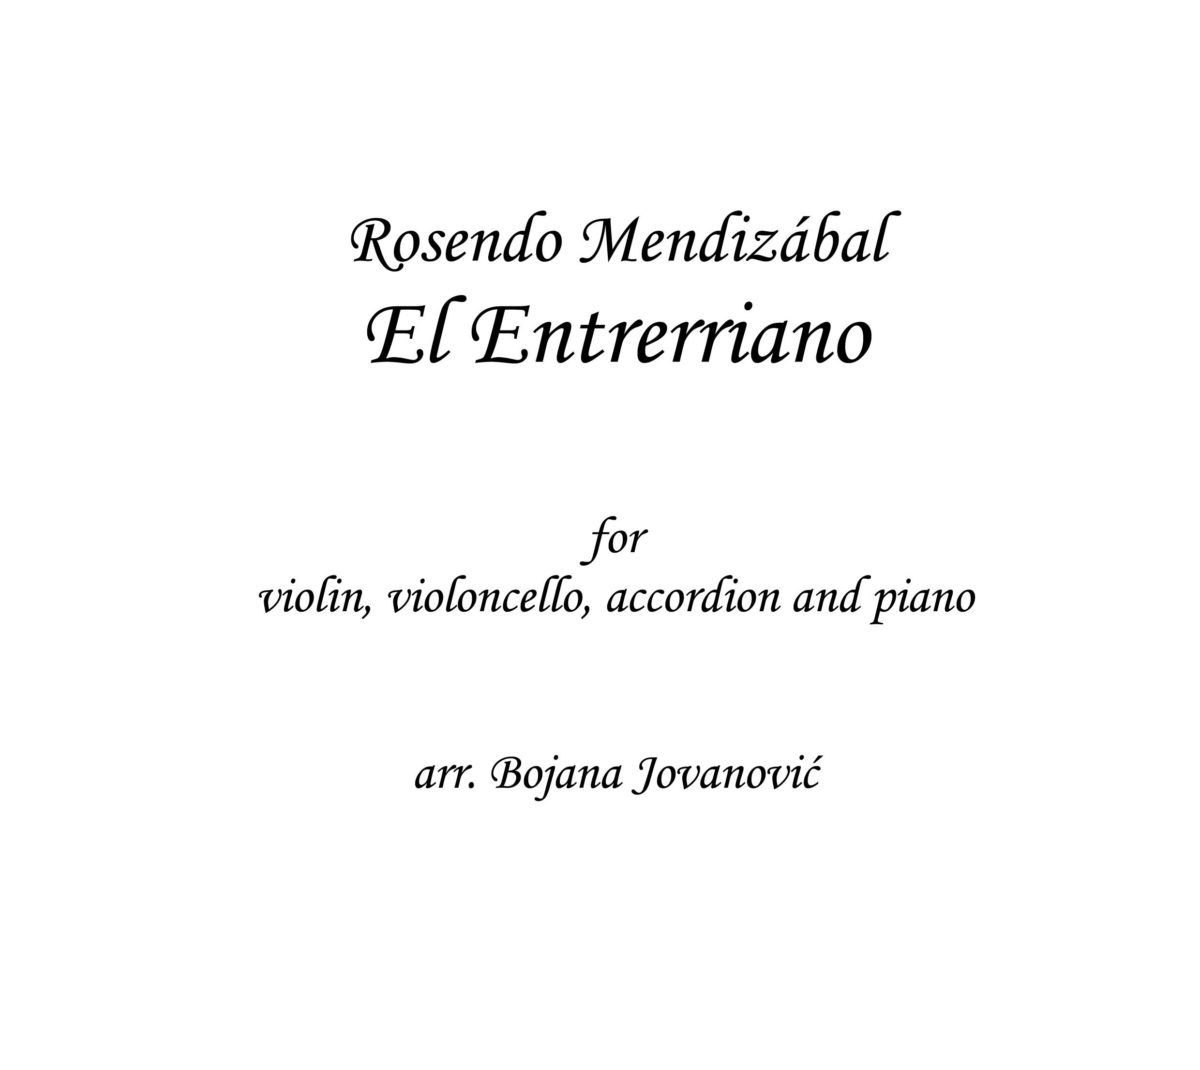 El Entrerriano (Rosendo Mendizabal) - Sheet Music